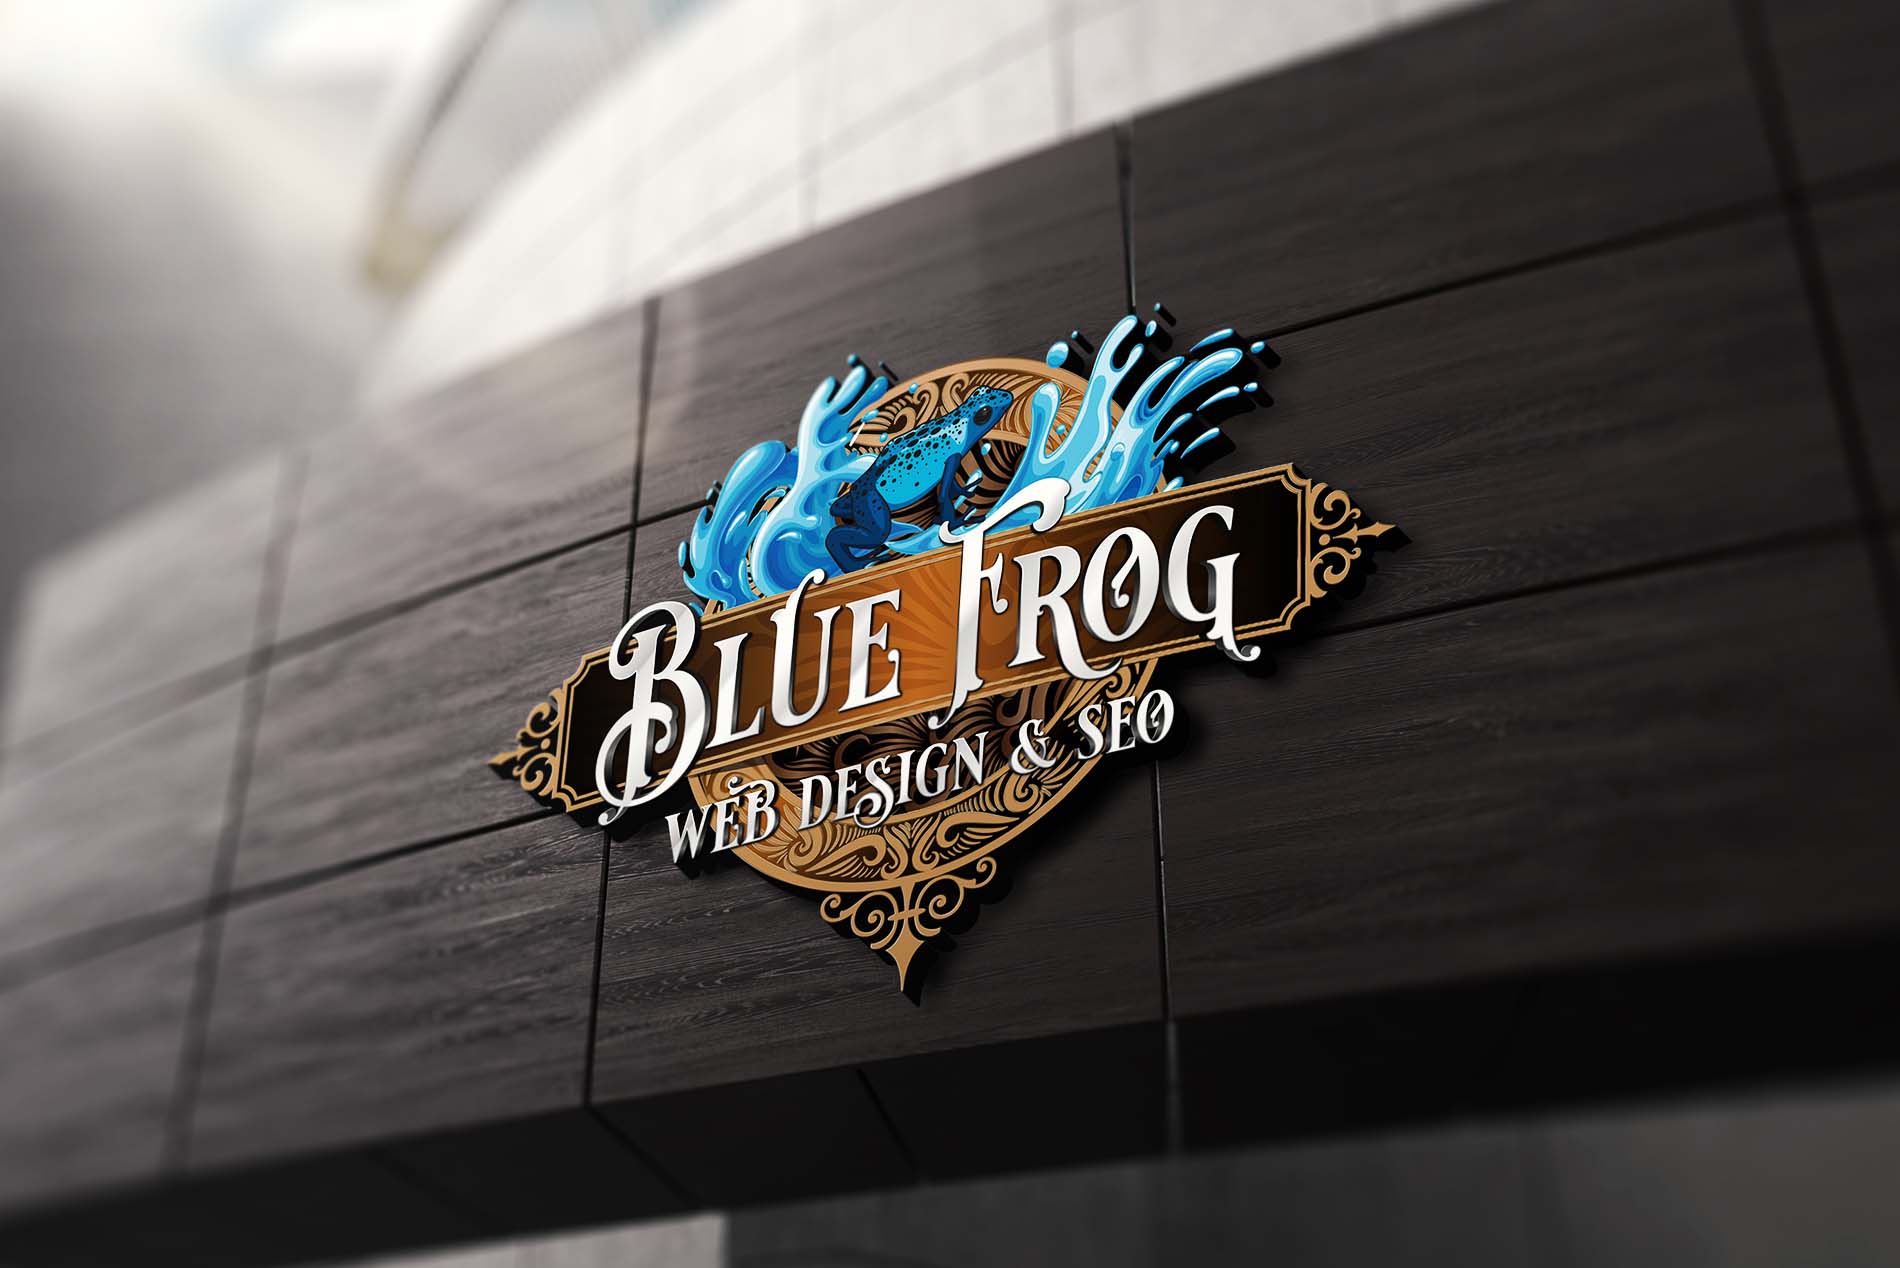 Top Web Design Company in Orangevale, CA. Blue Frog Web Design & SEO